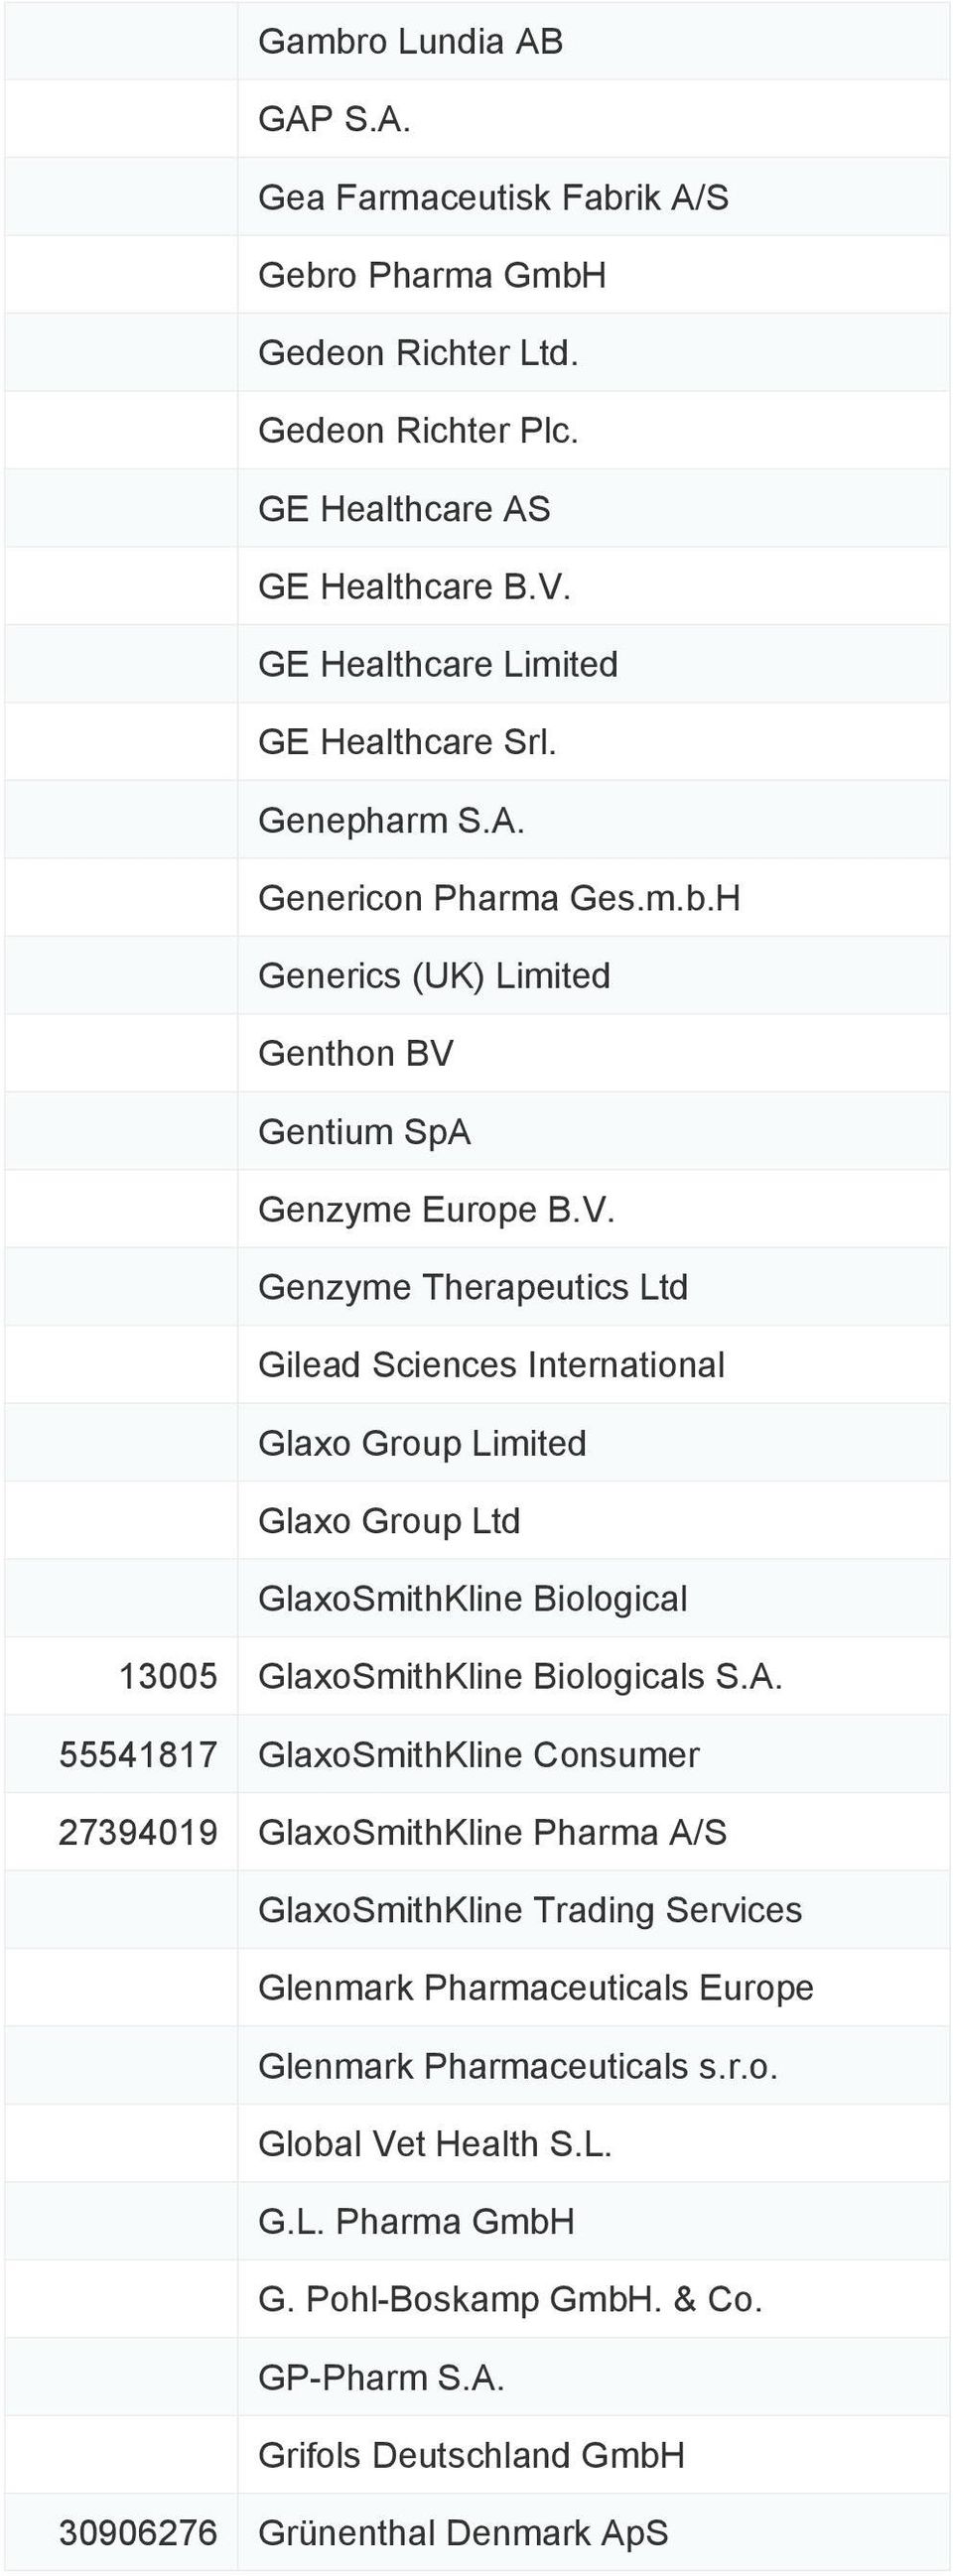 Gentium SpA Genzyme Europe B.V. Genzyme Therapeutics Ltd Gilead Sciences International Glaxo Group Limited Glaxo Group Ltd GlaxoSmithKline Biological 13005 GlaxoSmithKline Biologicals S.A. 55541817 GlaxoSmithKline Consumer 27394019 GlaxoSmithKline Pharma A/S GlaxoSmithKline Trading Services Glenmark Pharmaceuticals Europe Glenmark Pharmaceuticals s.